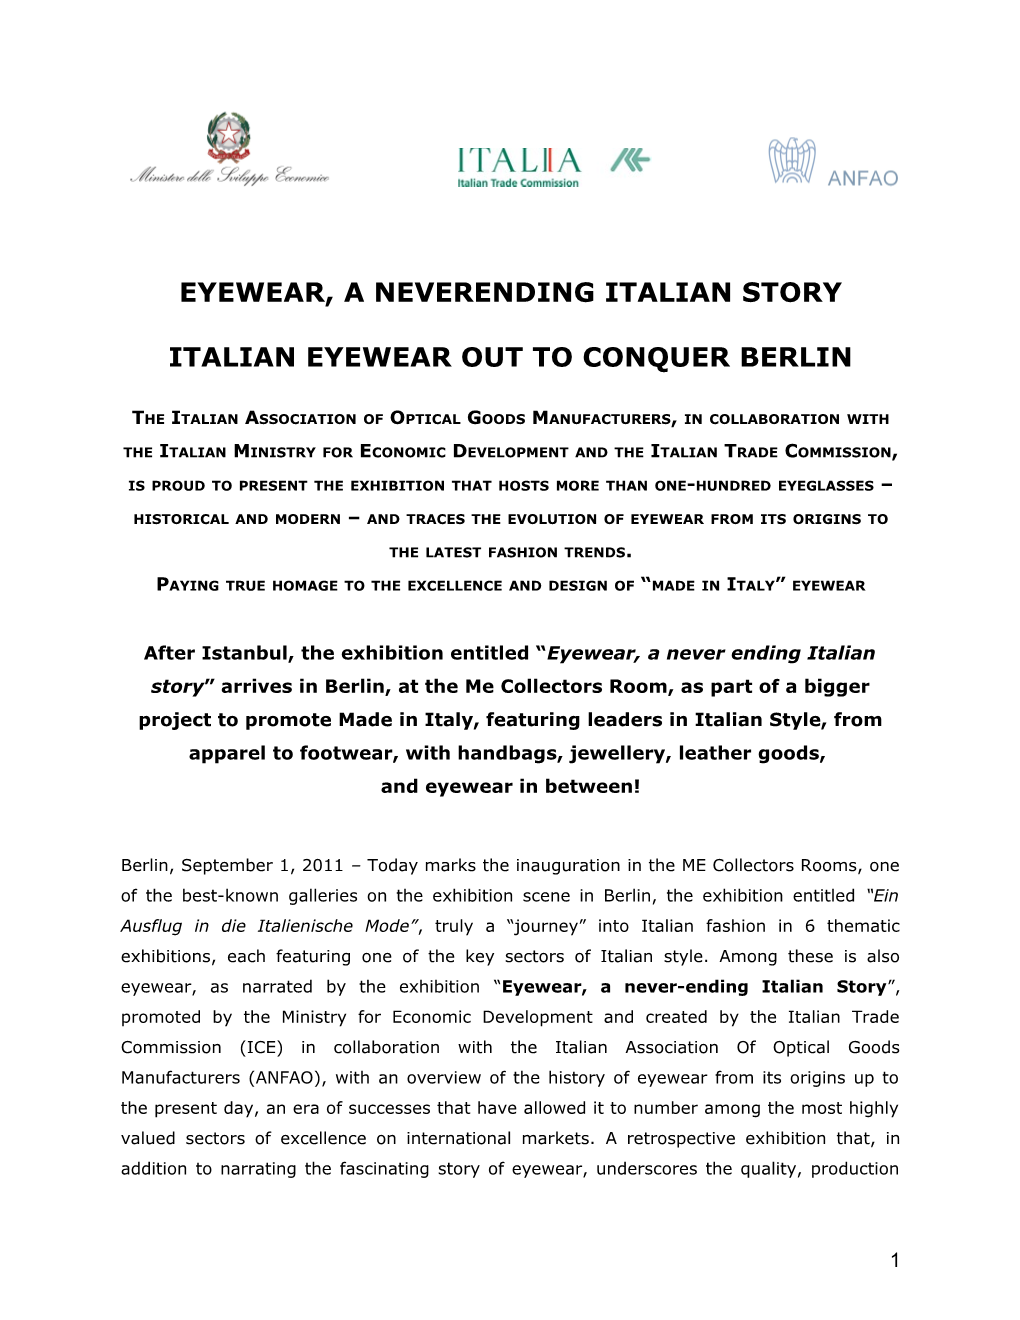 Eyewear, a Neverending Italian Story